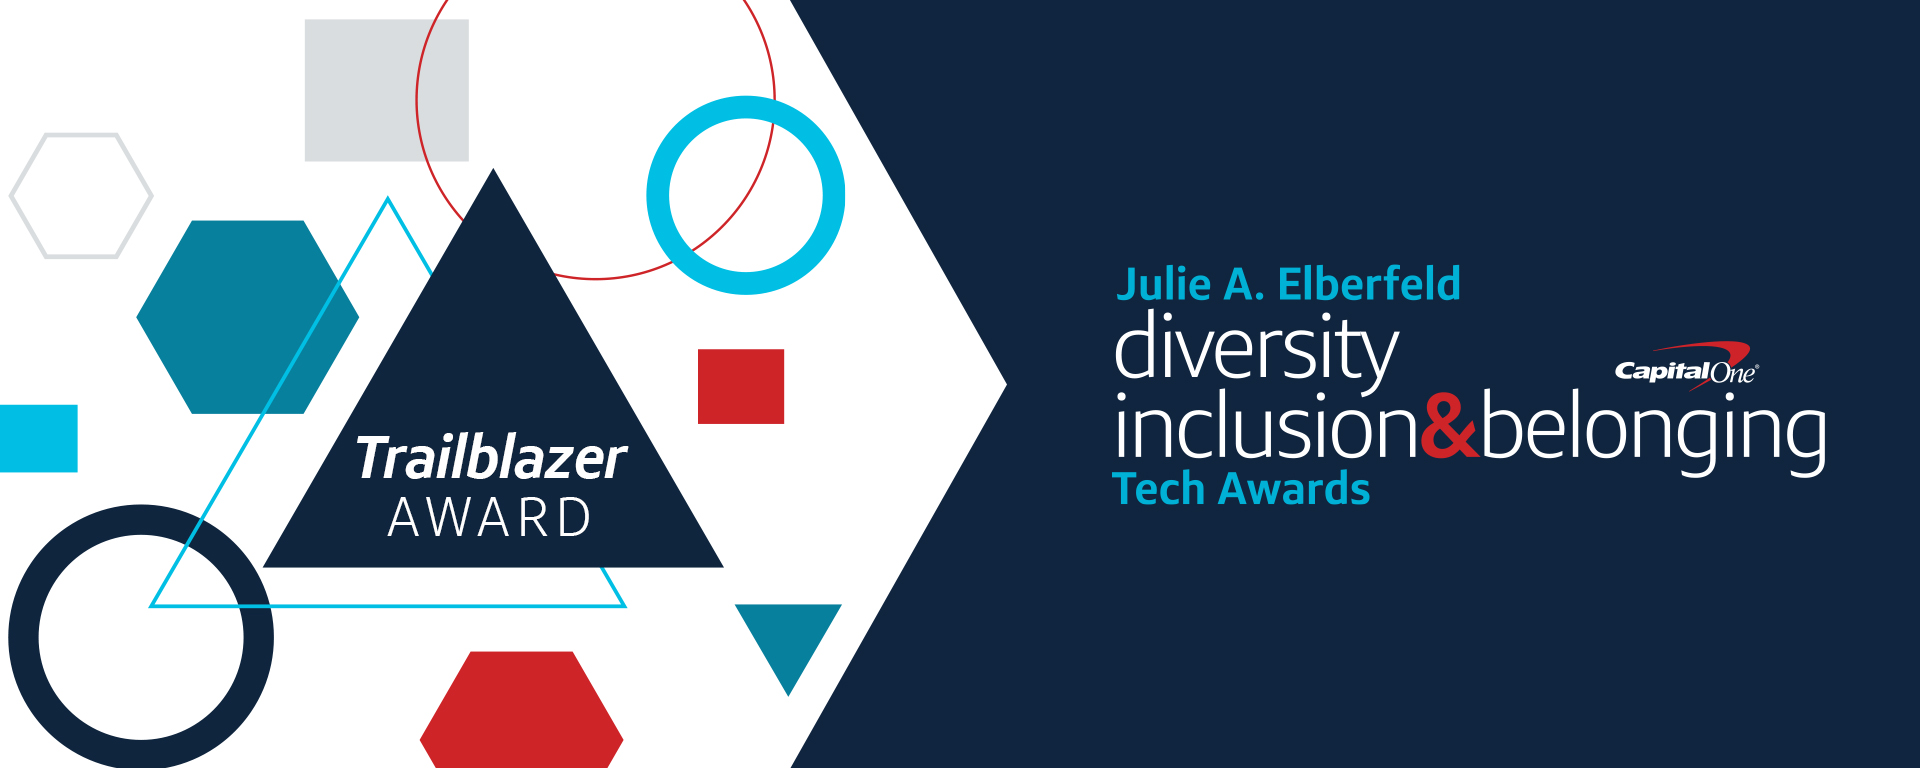 The Julie A. Elberfeld Tech Diversity, Inclusion and Belonging Awards Trailblazer Award celebrates inclusion in Tech